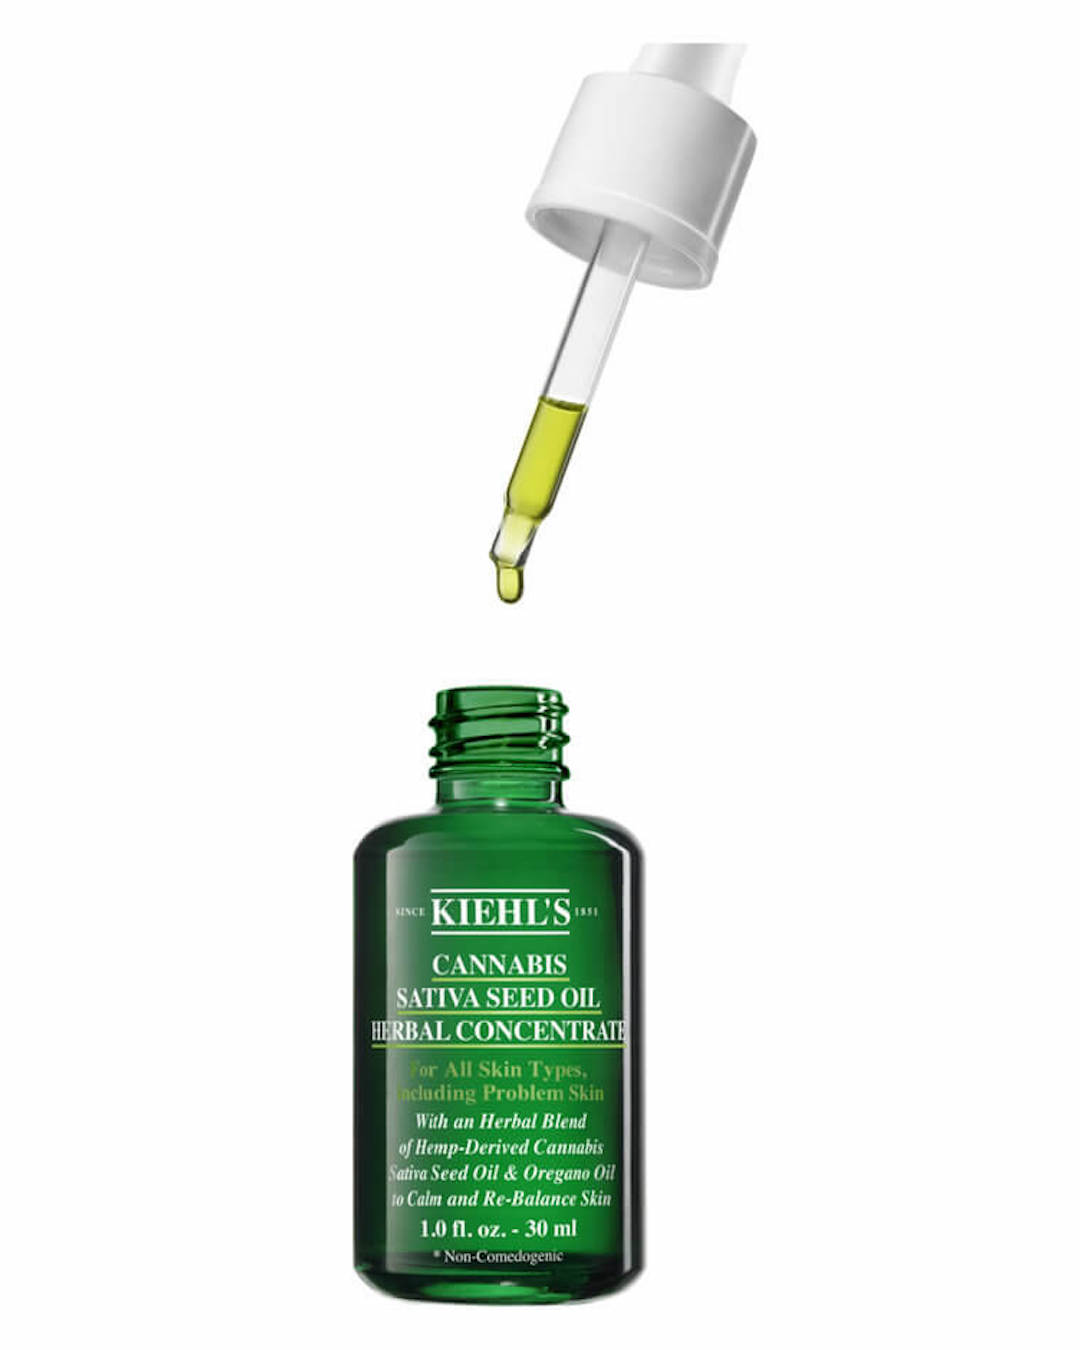 Kiehl's cannabis sativa seed oil for acne prone skin